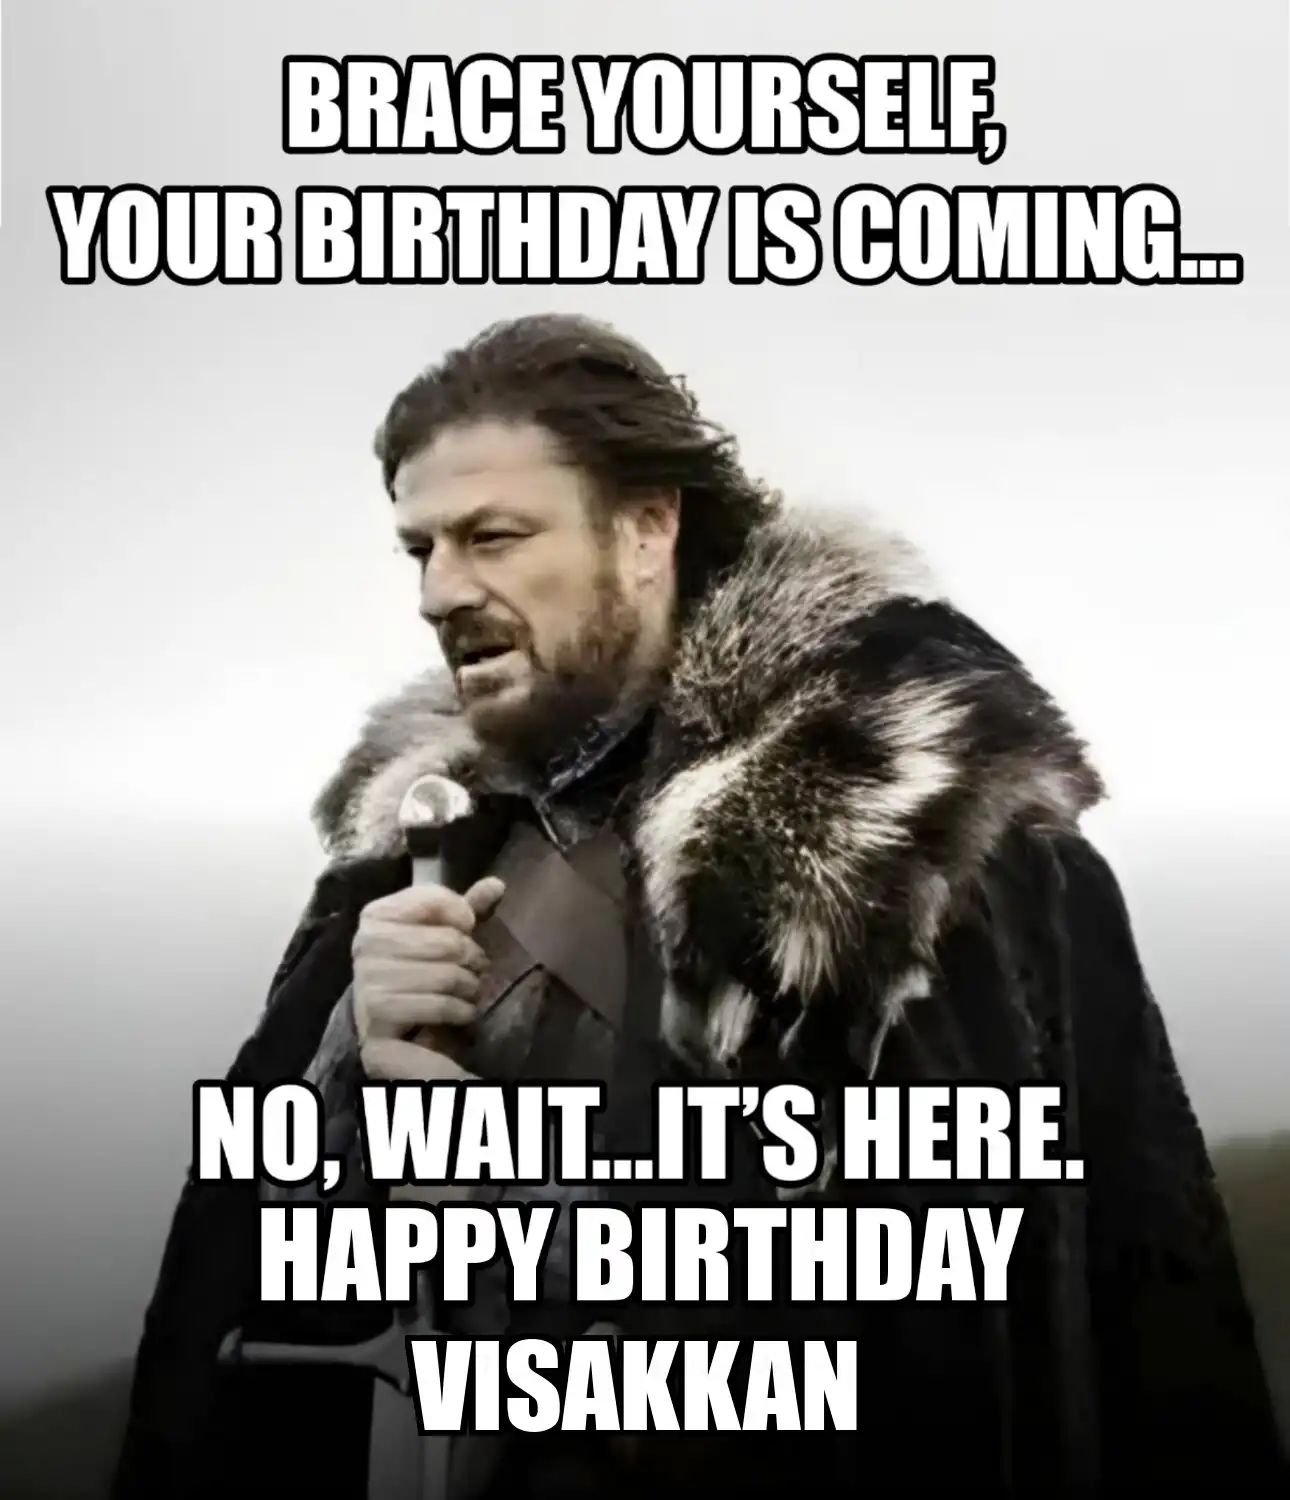 Happy Birthday Visakkan Brace Yourself Your Birthday Is Coming Meme